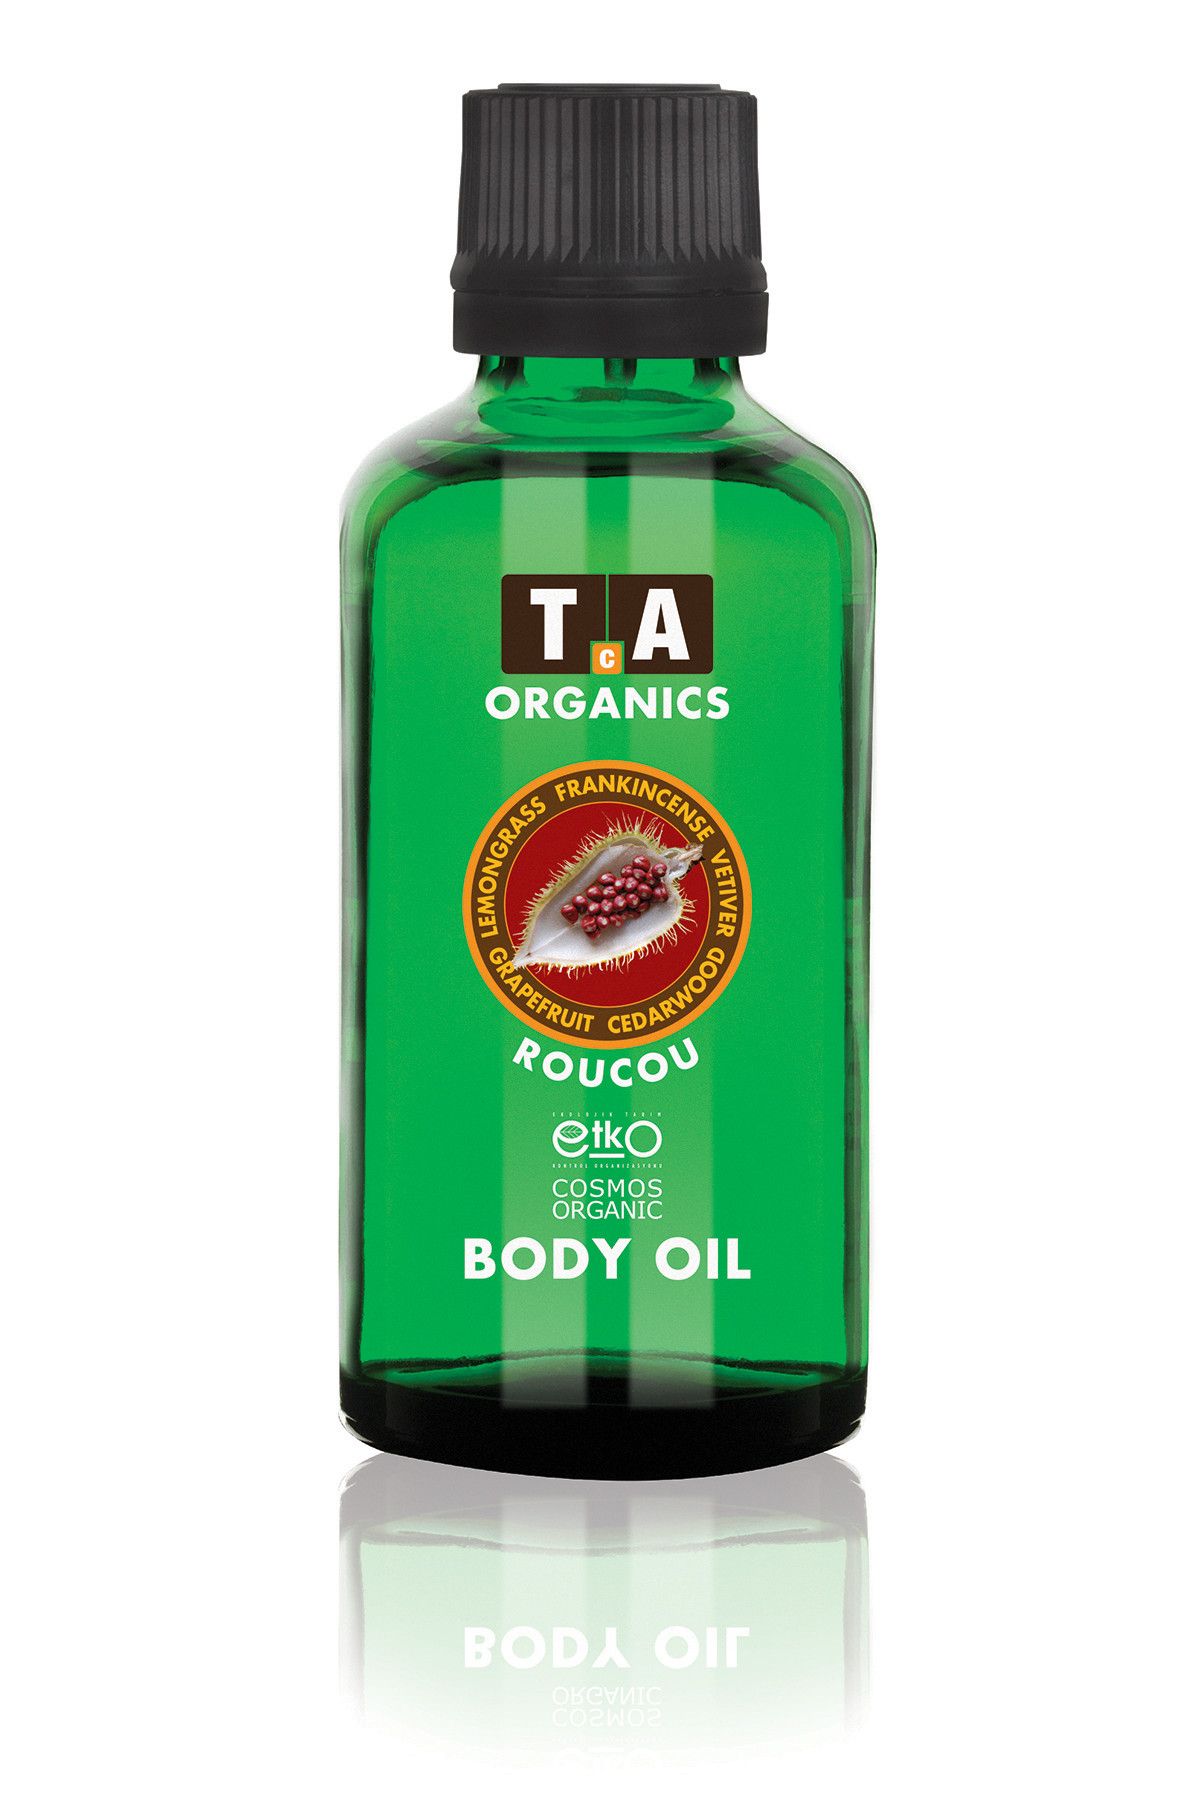 Tca Organics Vücut Yağı - Roucou Body Oil 50 ml 8680196184023